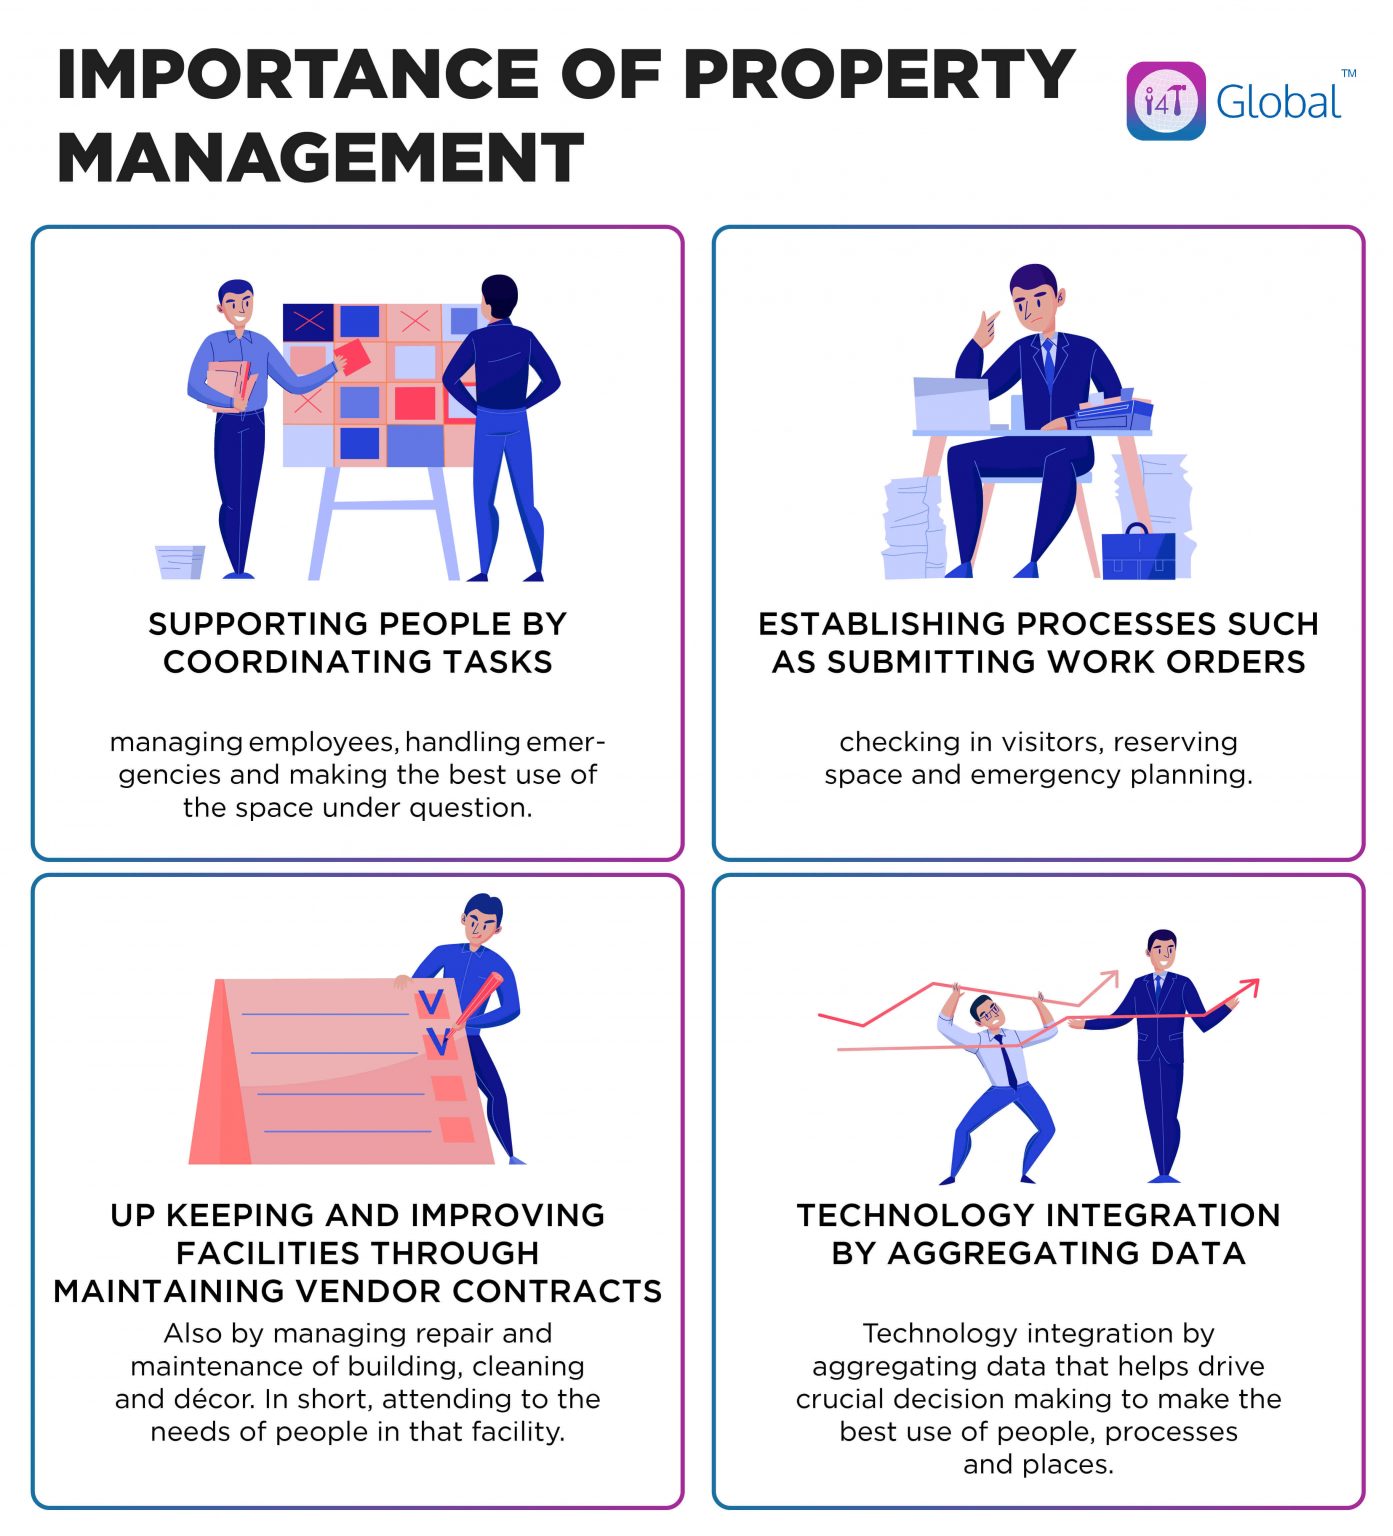 Importance of property management - i4T Global